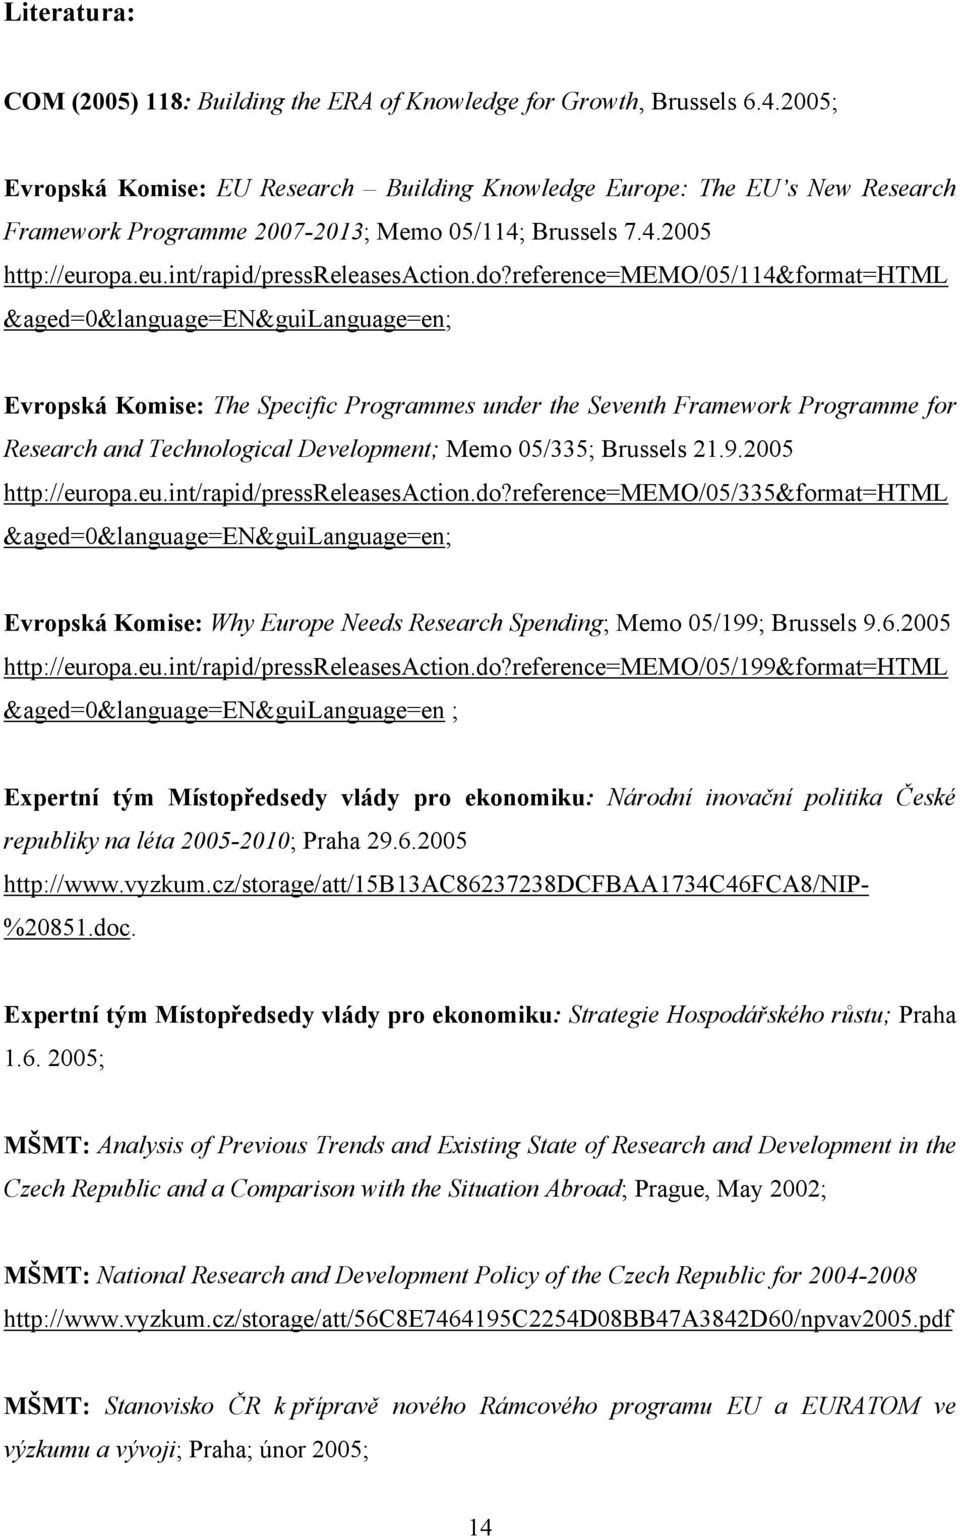 reference=memo/05/114&format=html &aged=0&language=en&guilanguage=en; Evropská Komise: The Specific Programmes under the Seventh Framework Programme for Research and Technological Development; Memo